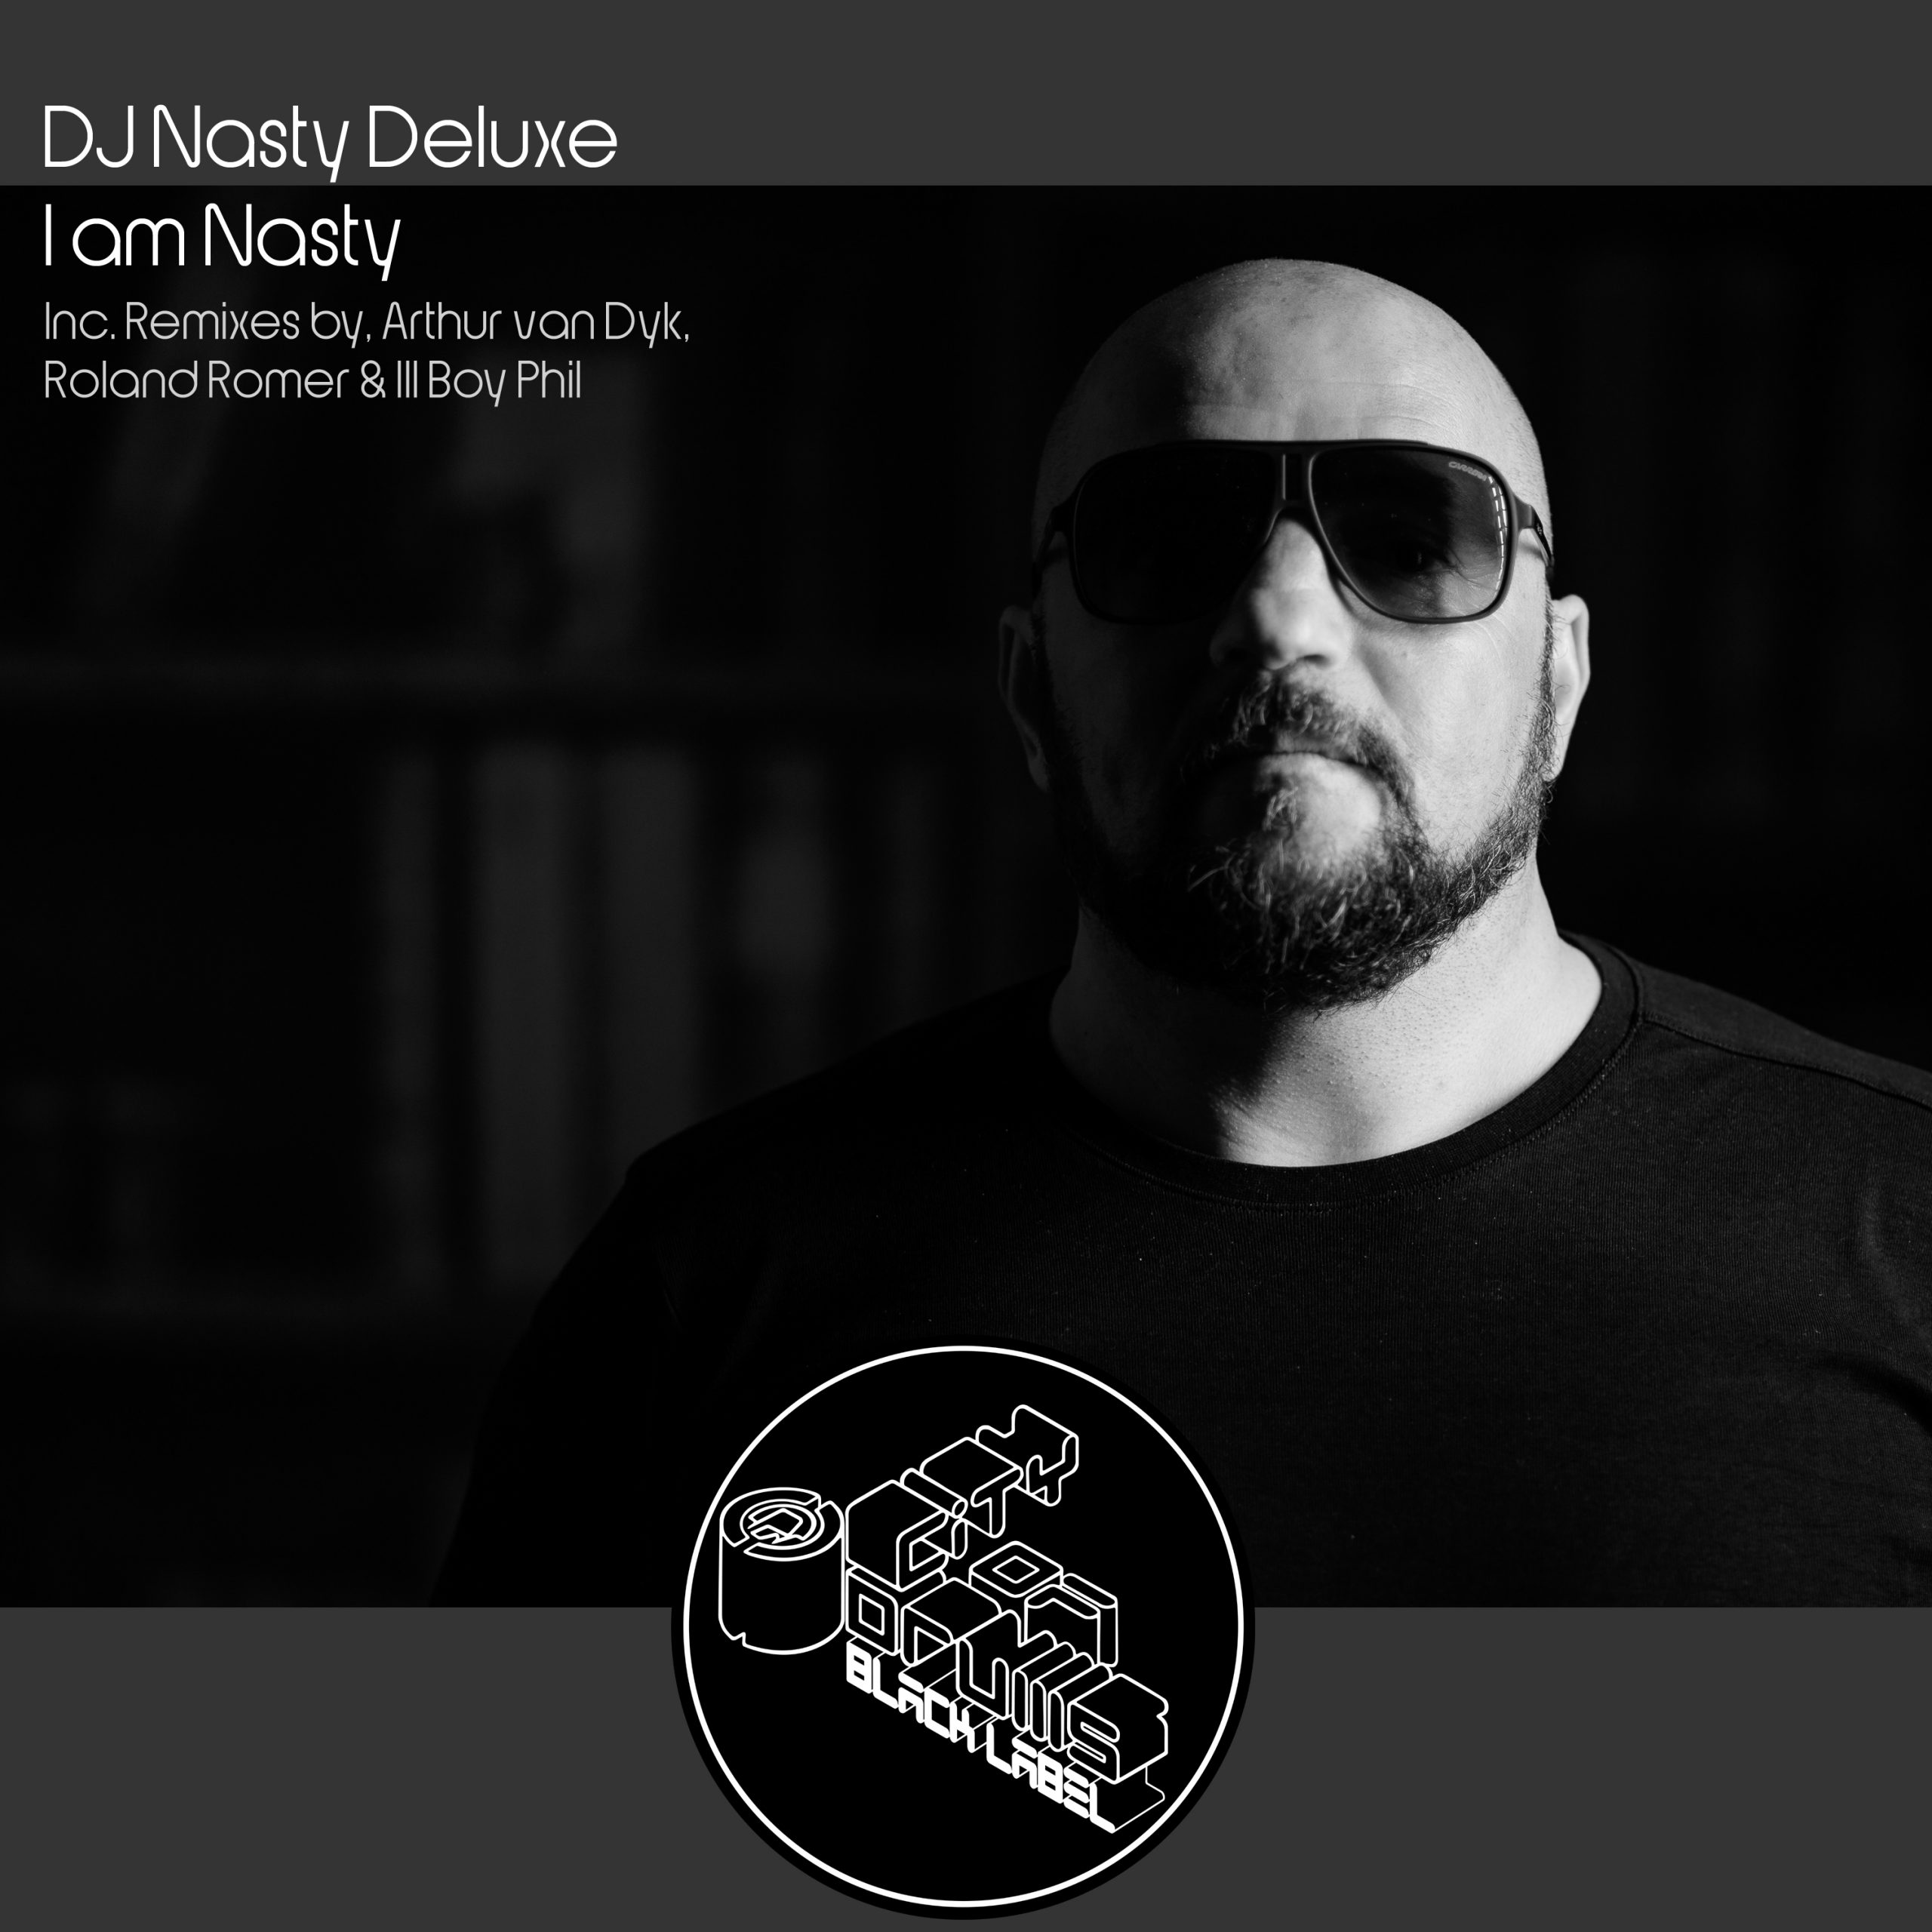 OUT NOW!!! I am Nasty von DJ Nasty Deluxe! 15